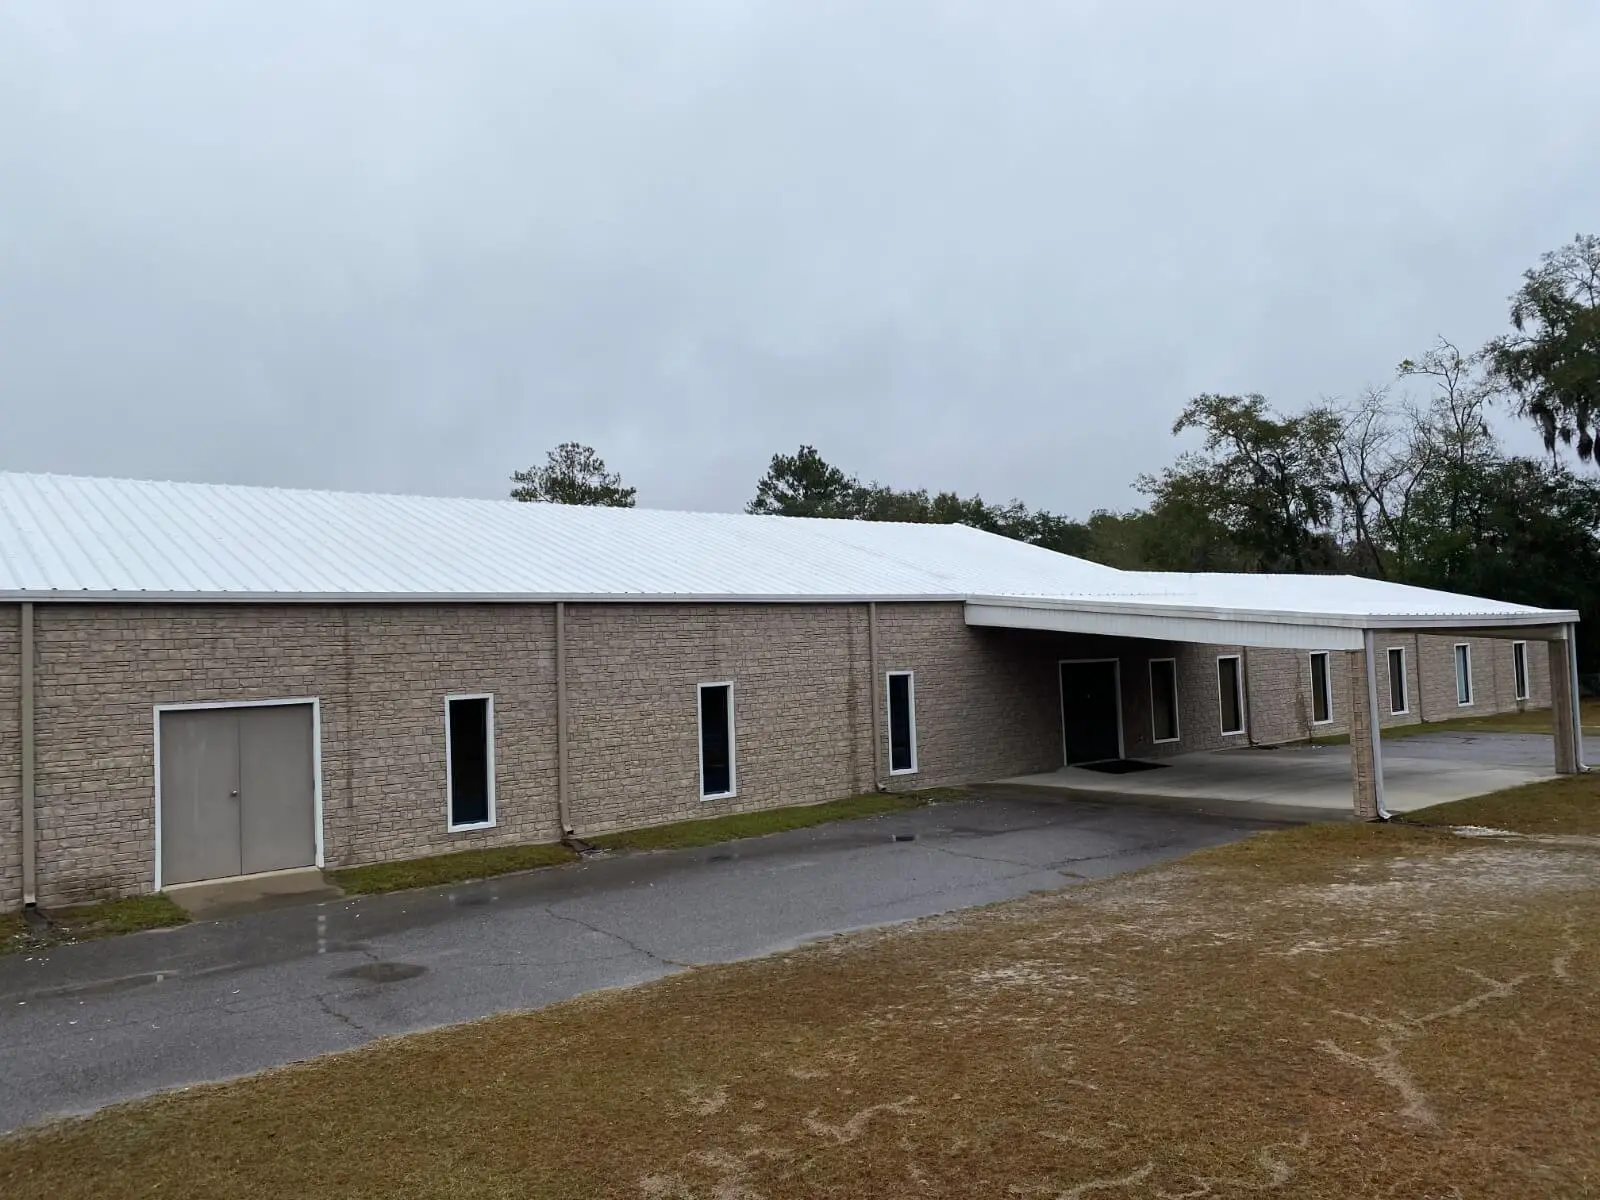 Westside Baptist in Hinesville, GA